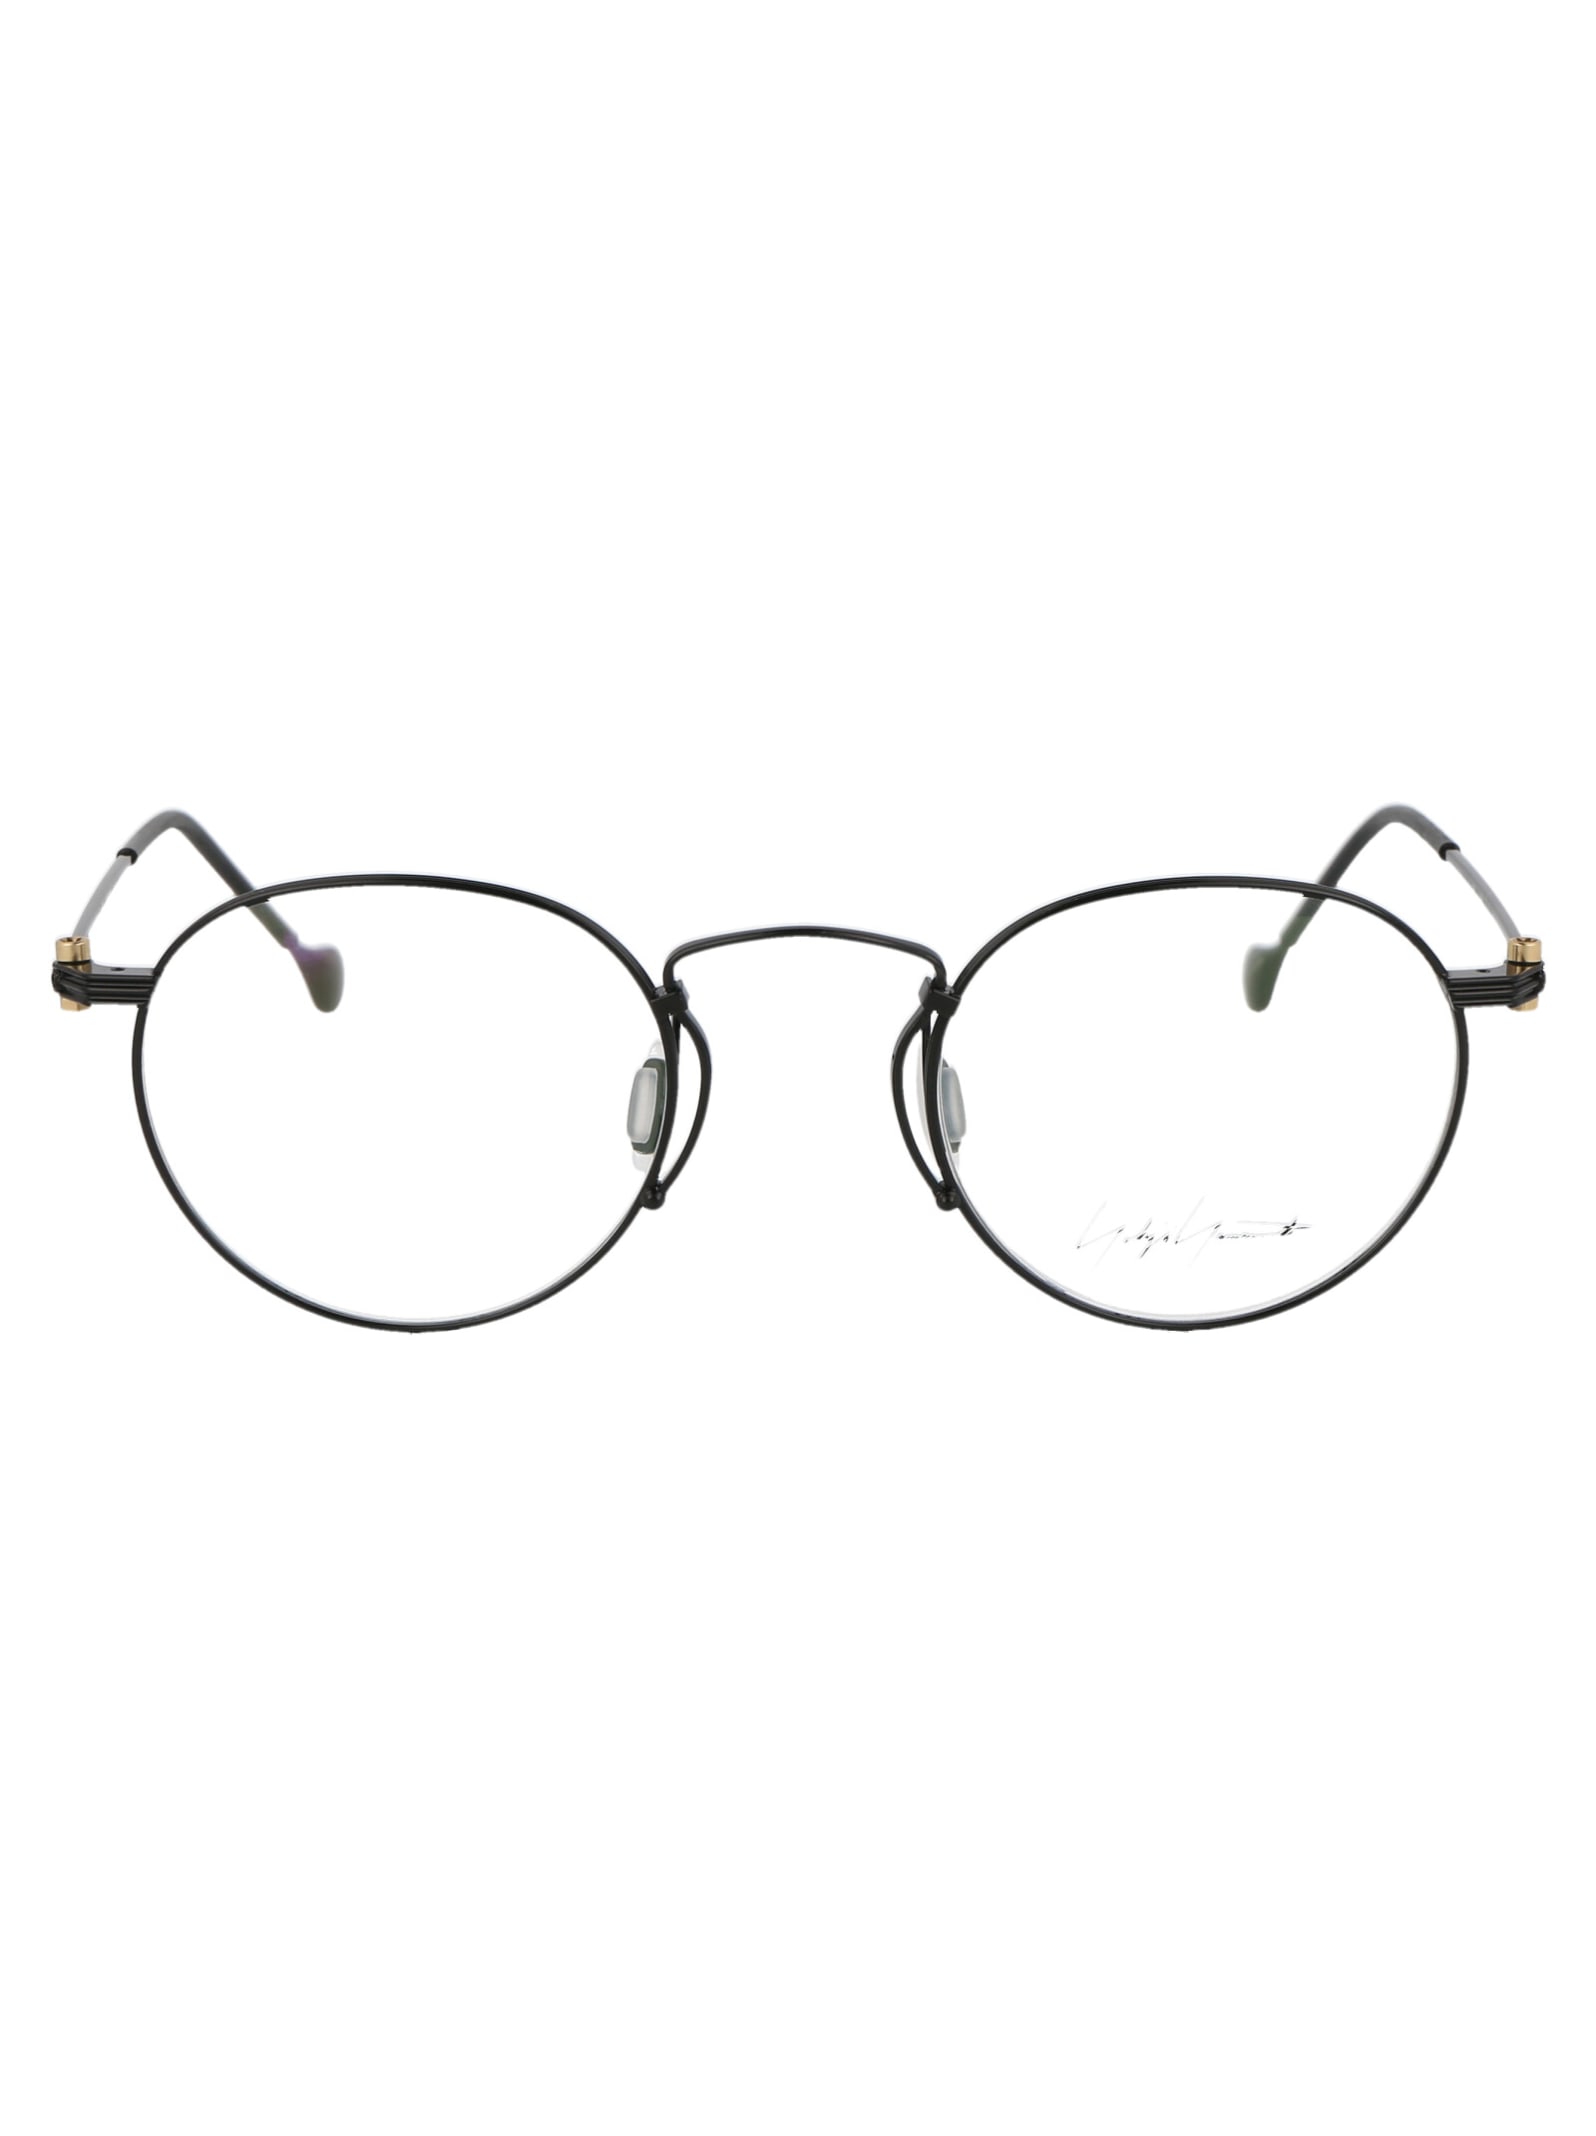 Yohji Yamamoto Look 006 Glasses